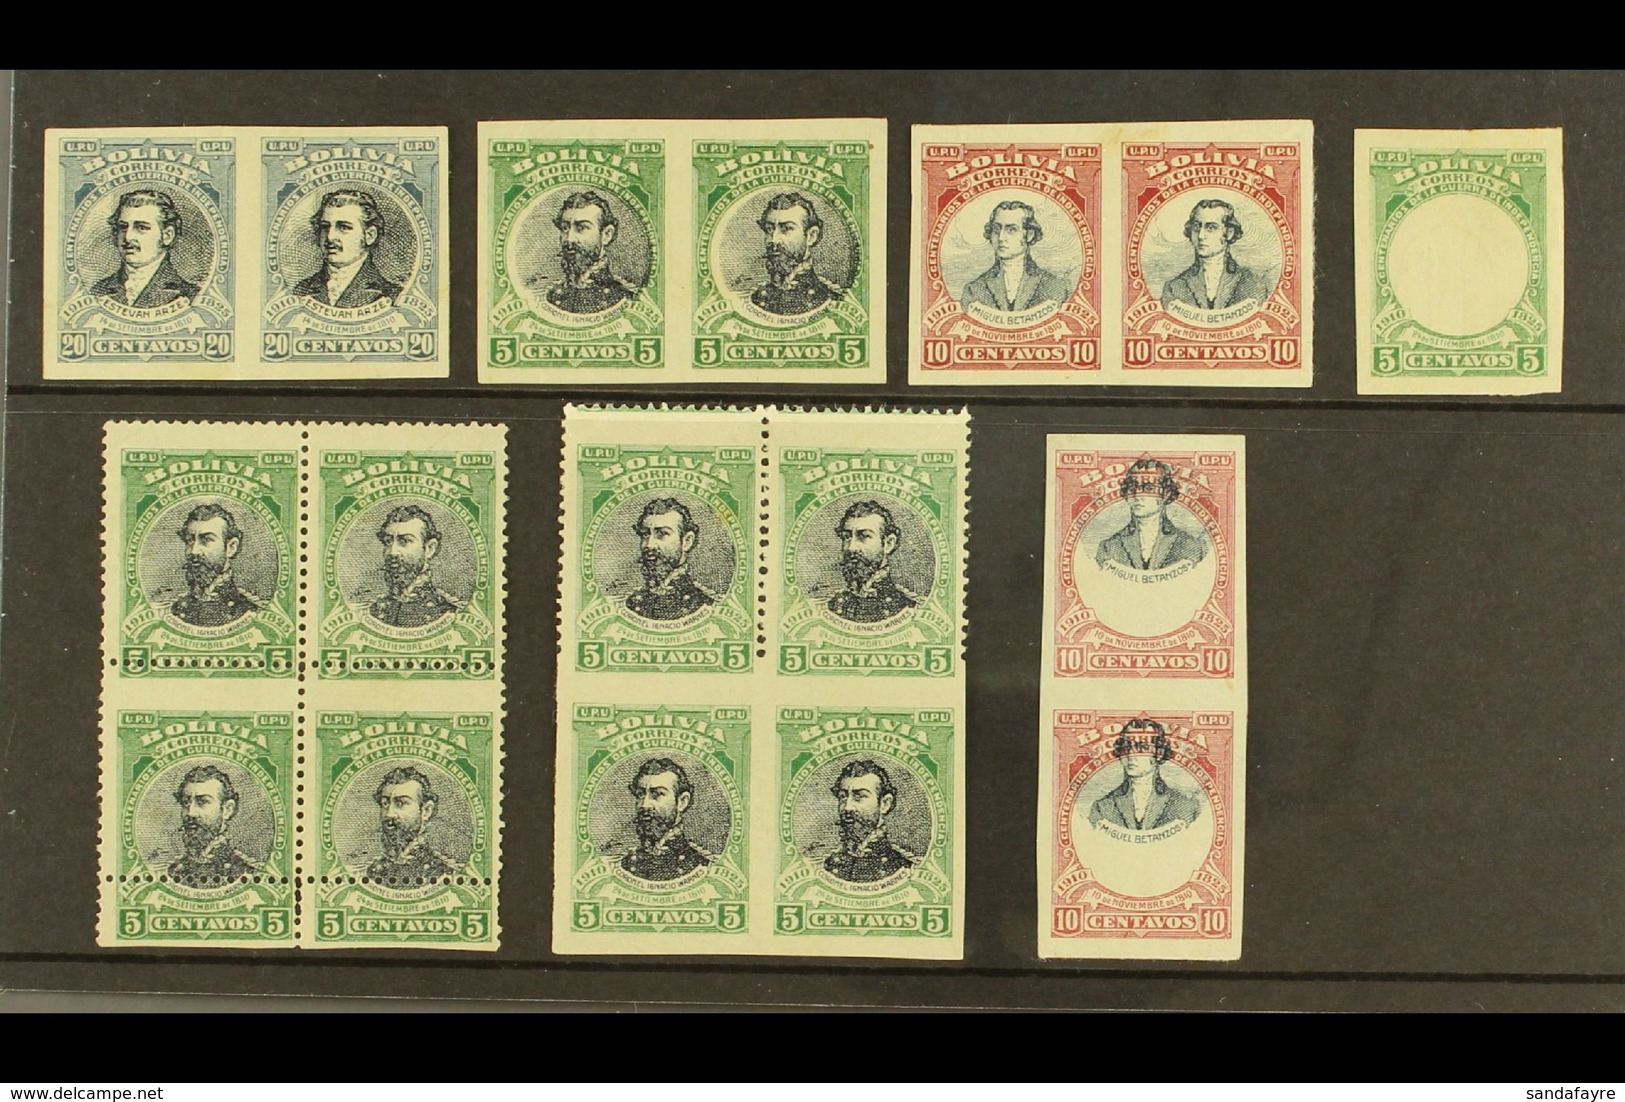 1910 VARIETIES & ERRORS.  War Of Independence Fine Mint Group Of Perf Varieties & Errors, Comprising 1910 Horiz Imperf P - Bolivien